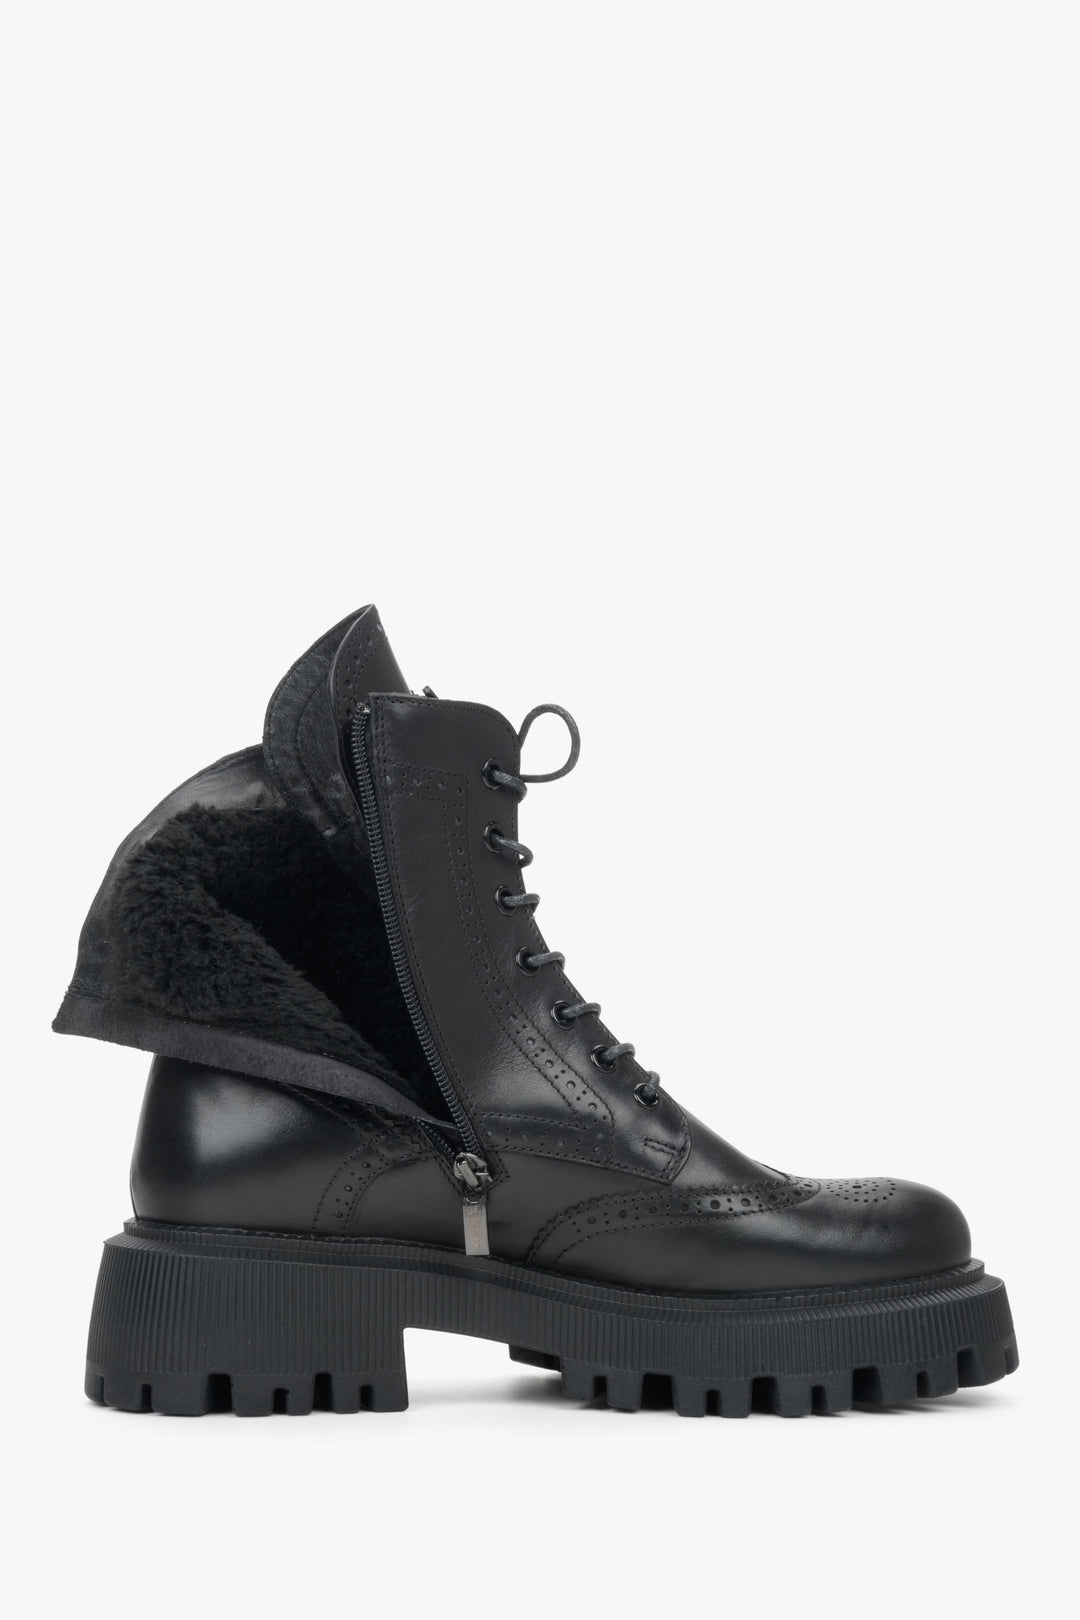 Lace-up, leather Estro women's boots platform - shoe profile and close-up on details.